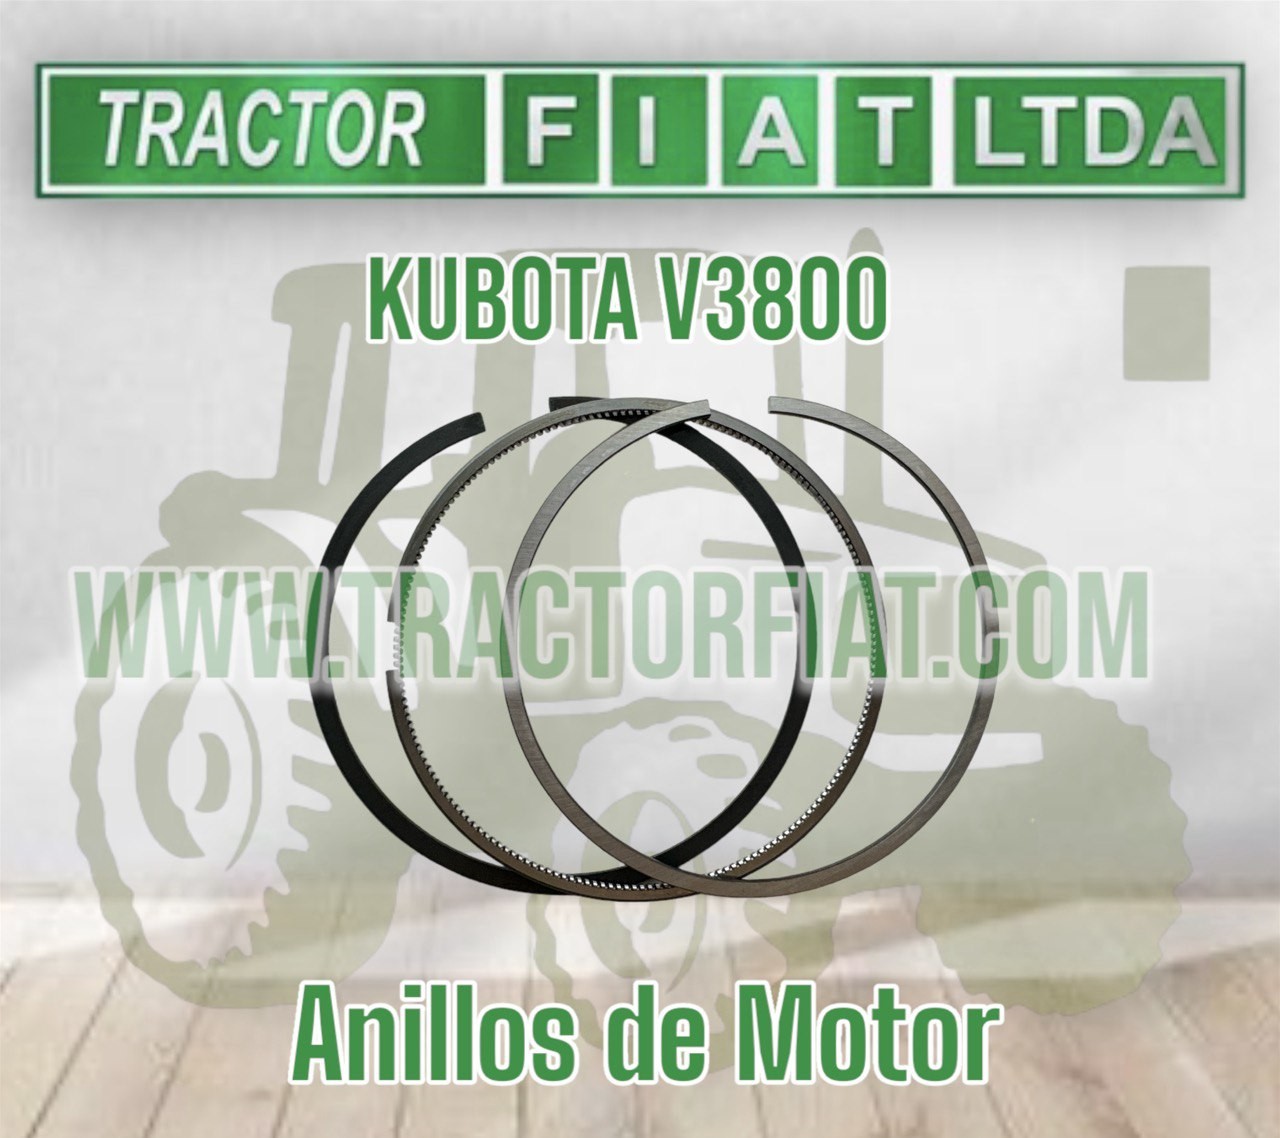 ANILLOS MOTOR KUBOTA V3800